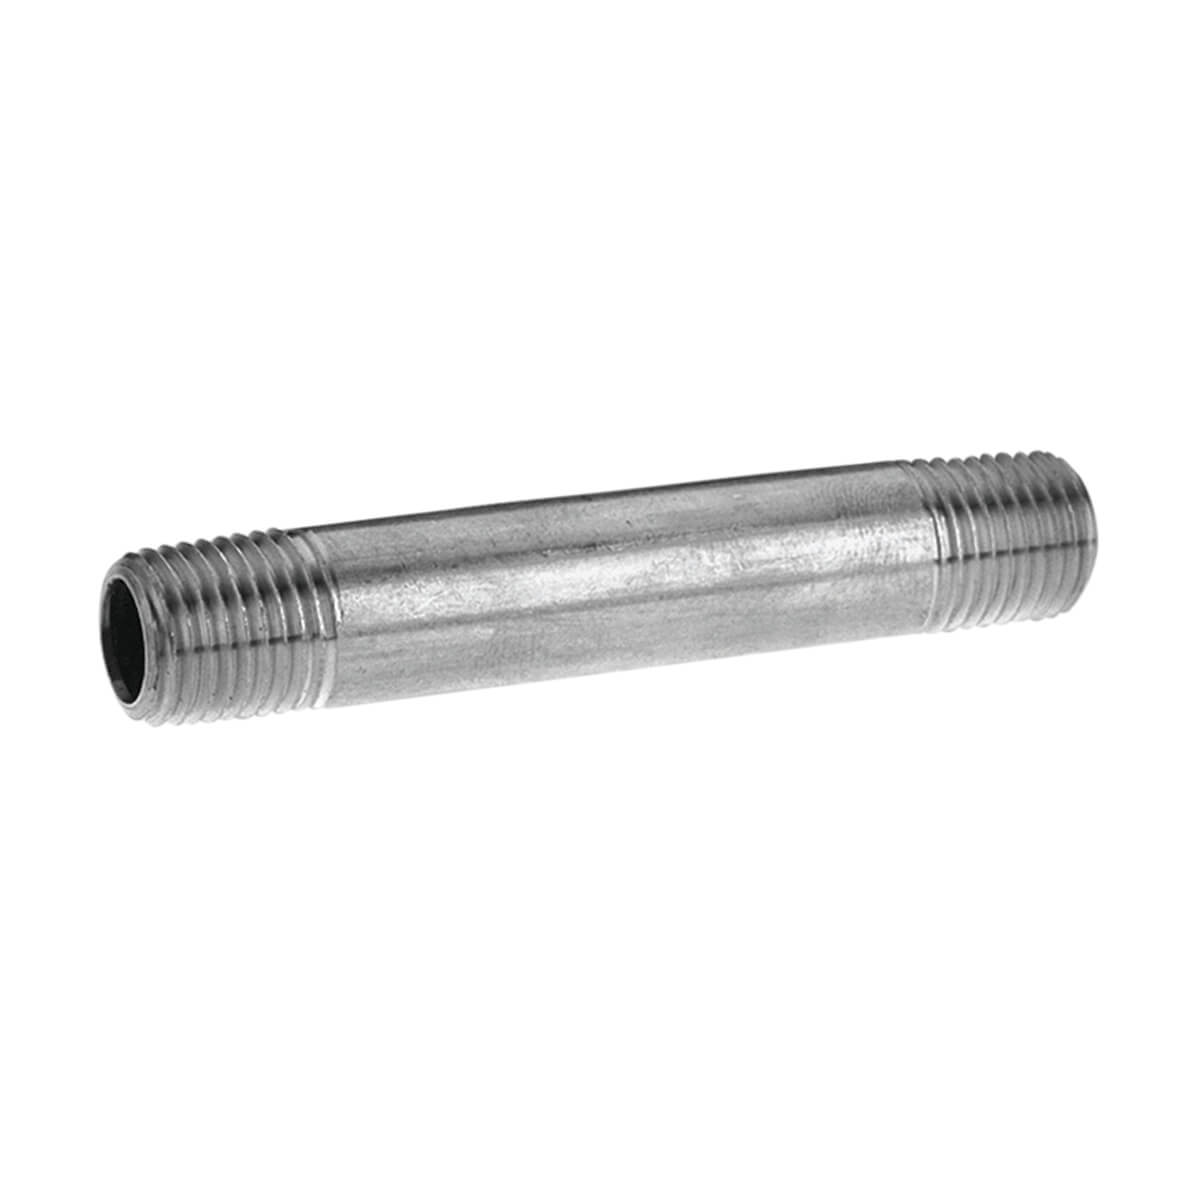 Pipe Nipple Galvanized Steel - 1-1/4-in x 24-in